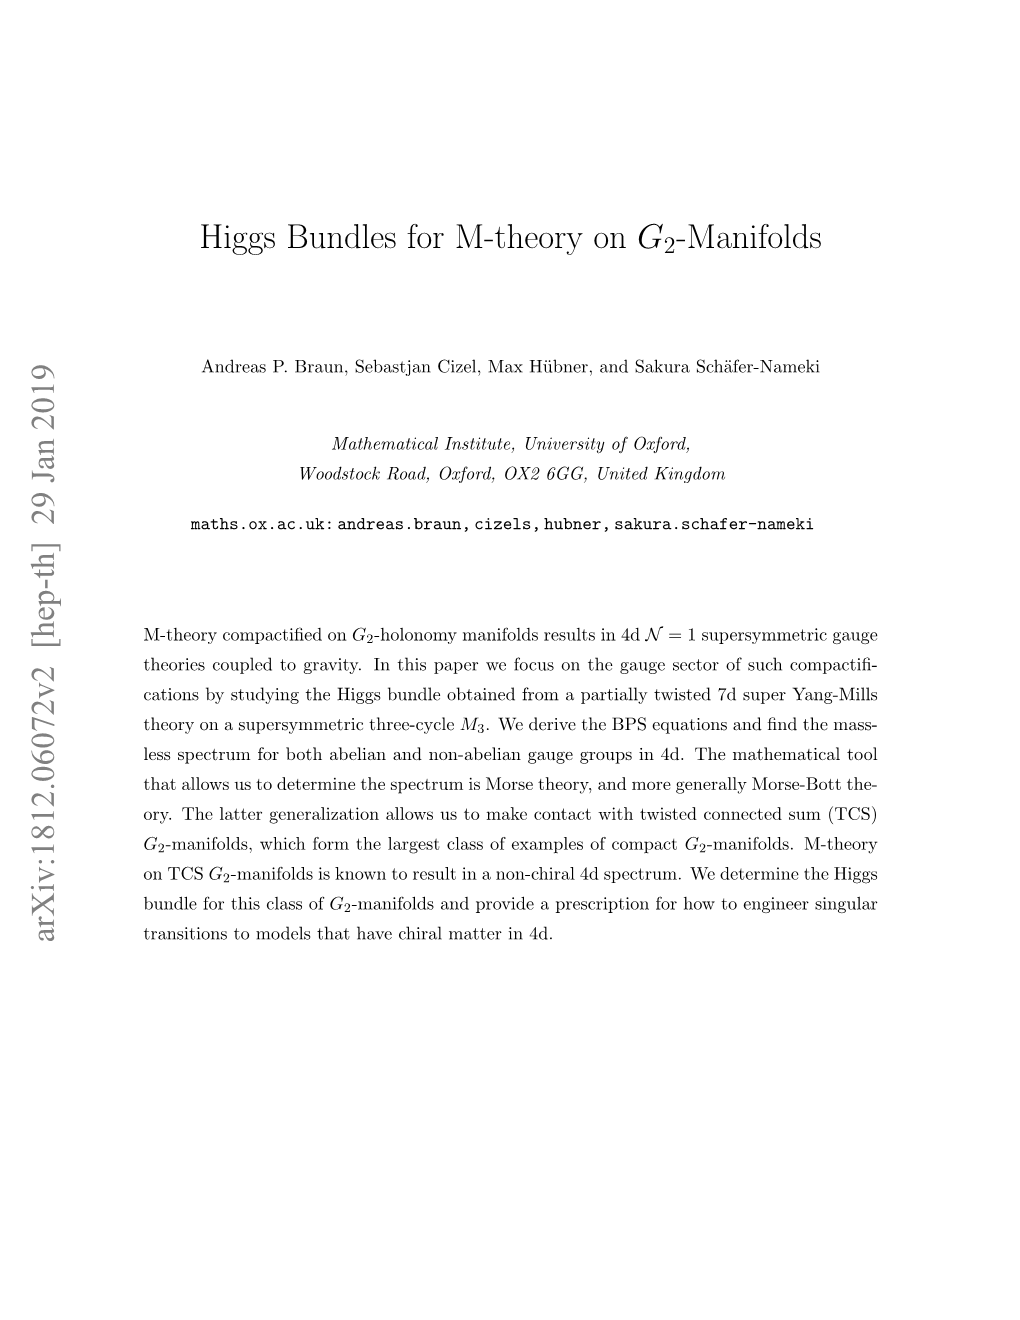 Higgs Bundles for M-Theory on G2-Manifolds Arxiv:1812.06072V2 [Hep-Th] 29 Jan 2019